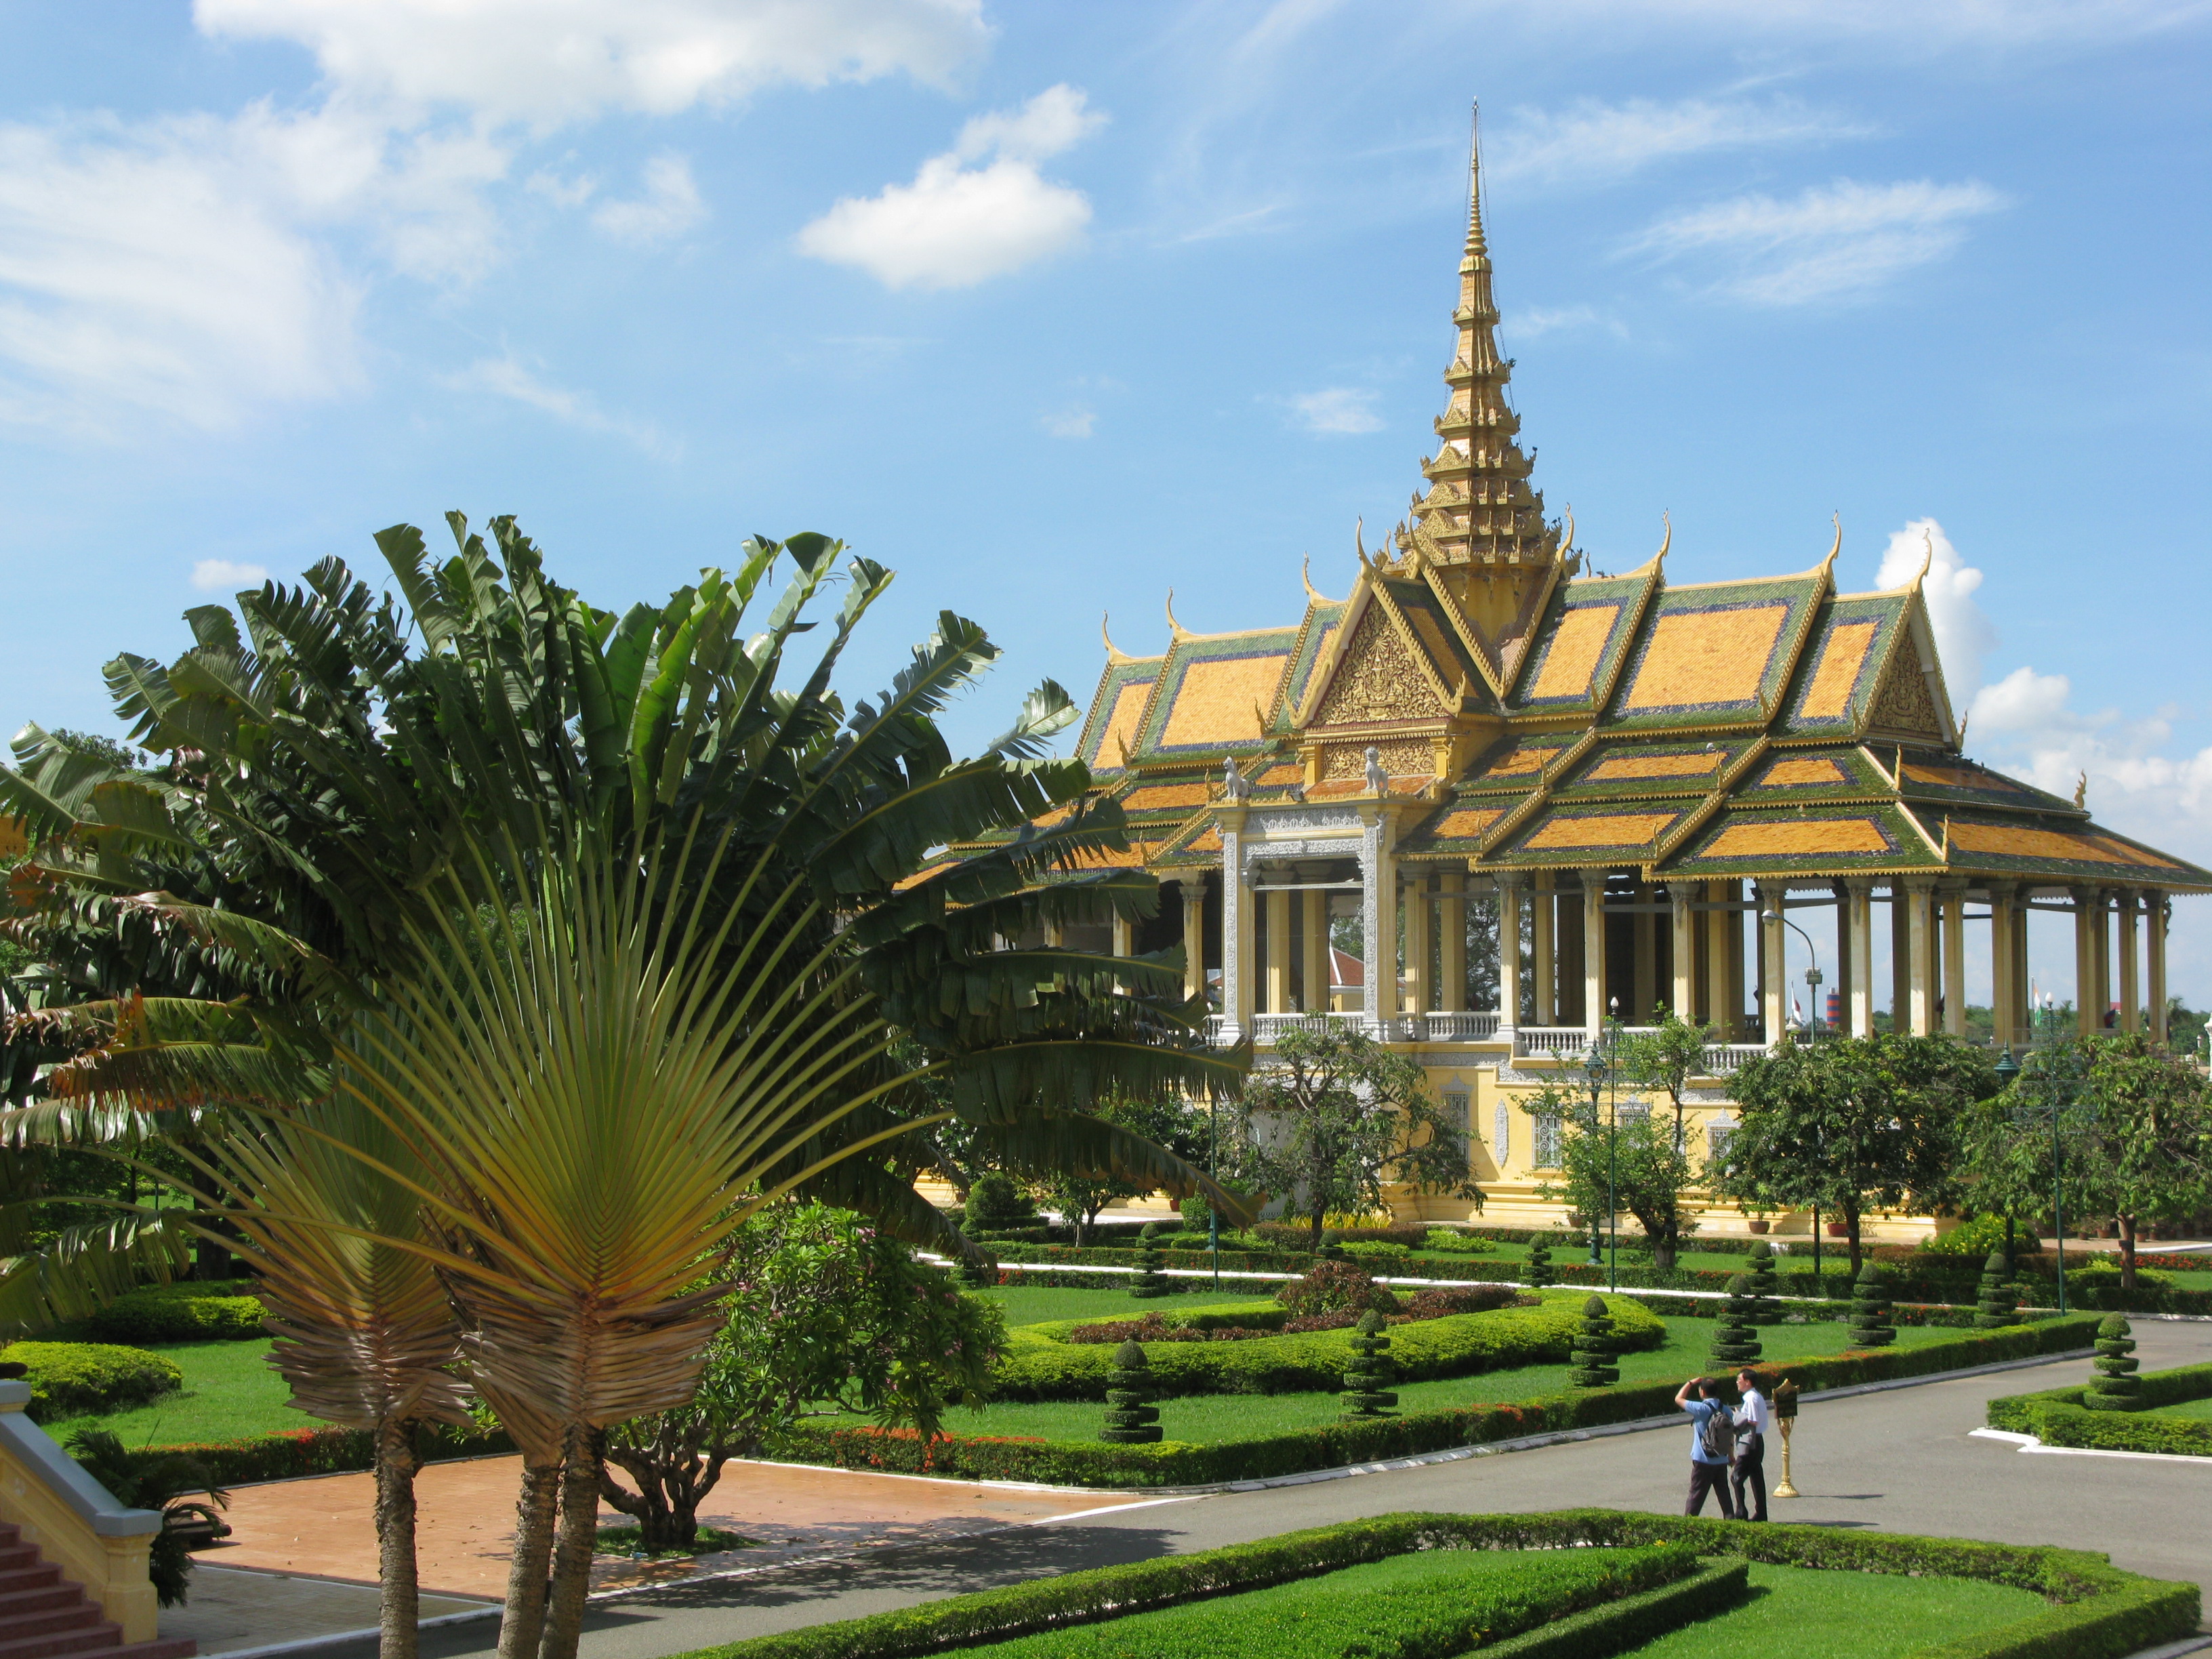 Download this Phnom Penh picture